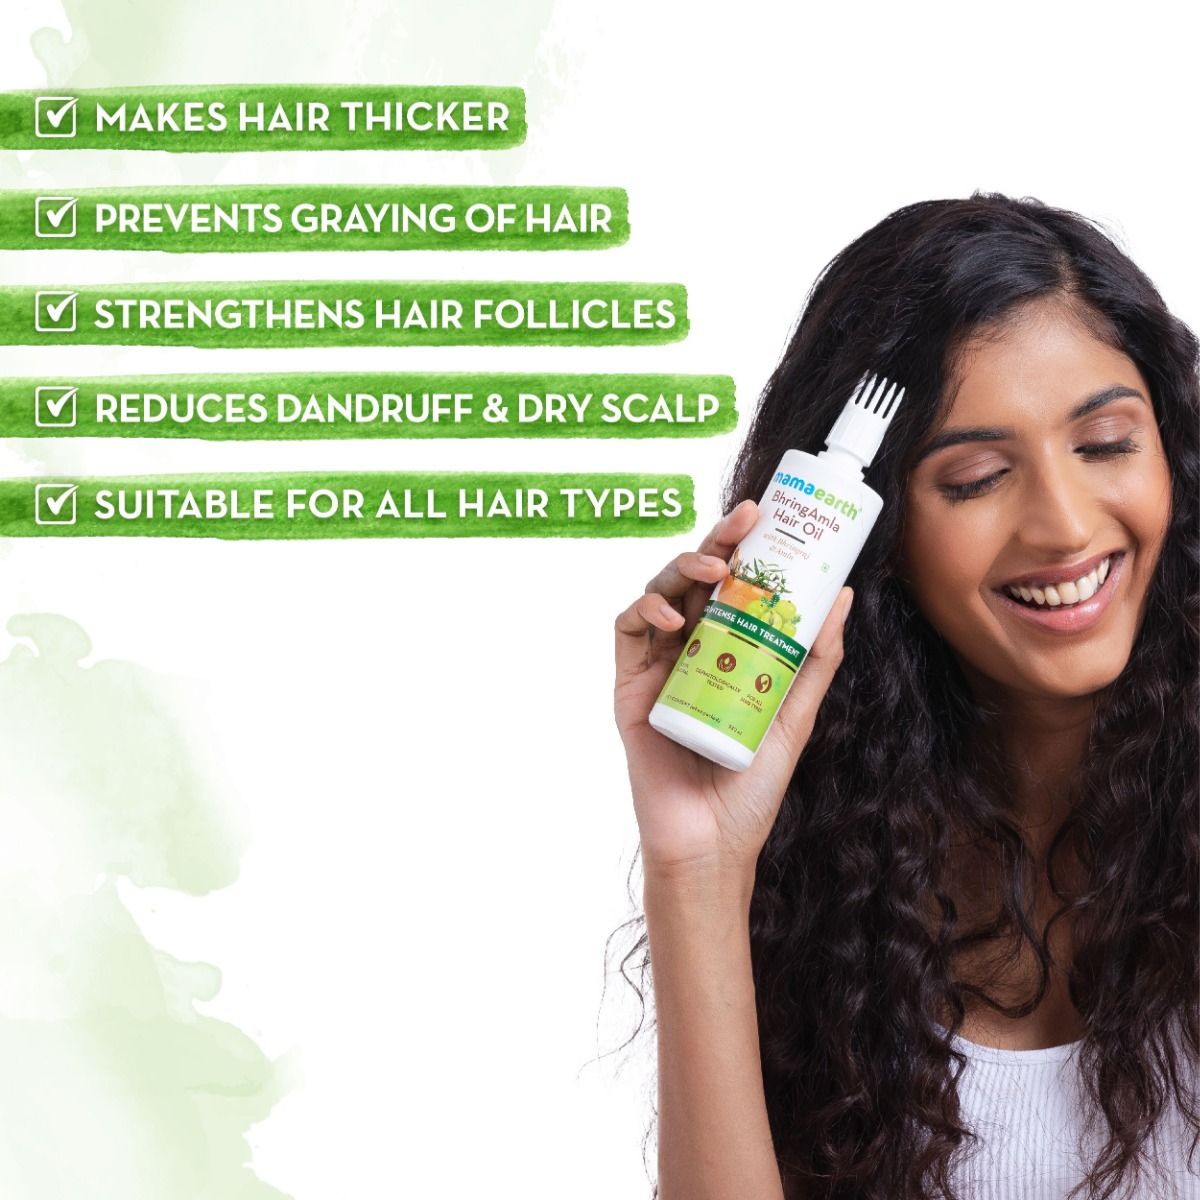 Buy DABUR Amla Hair Oil, 275ml Online at Low Prices in India - Amazon.in